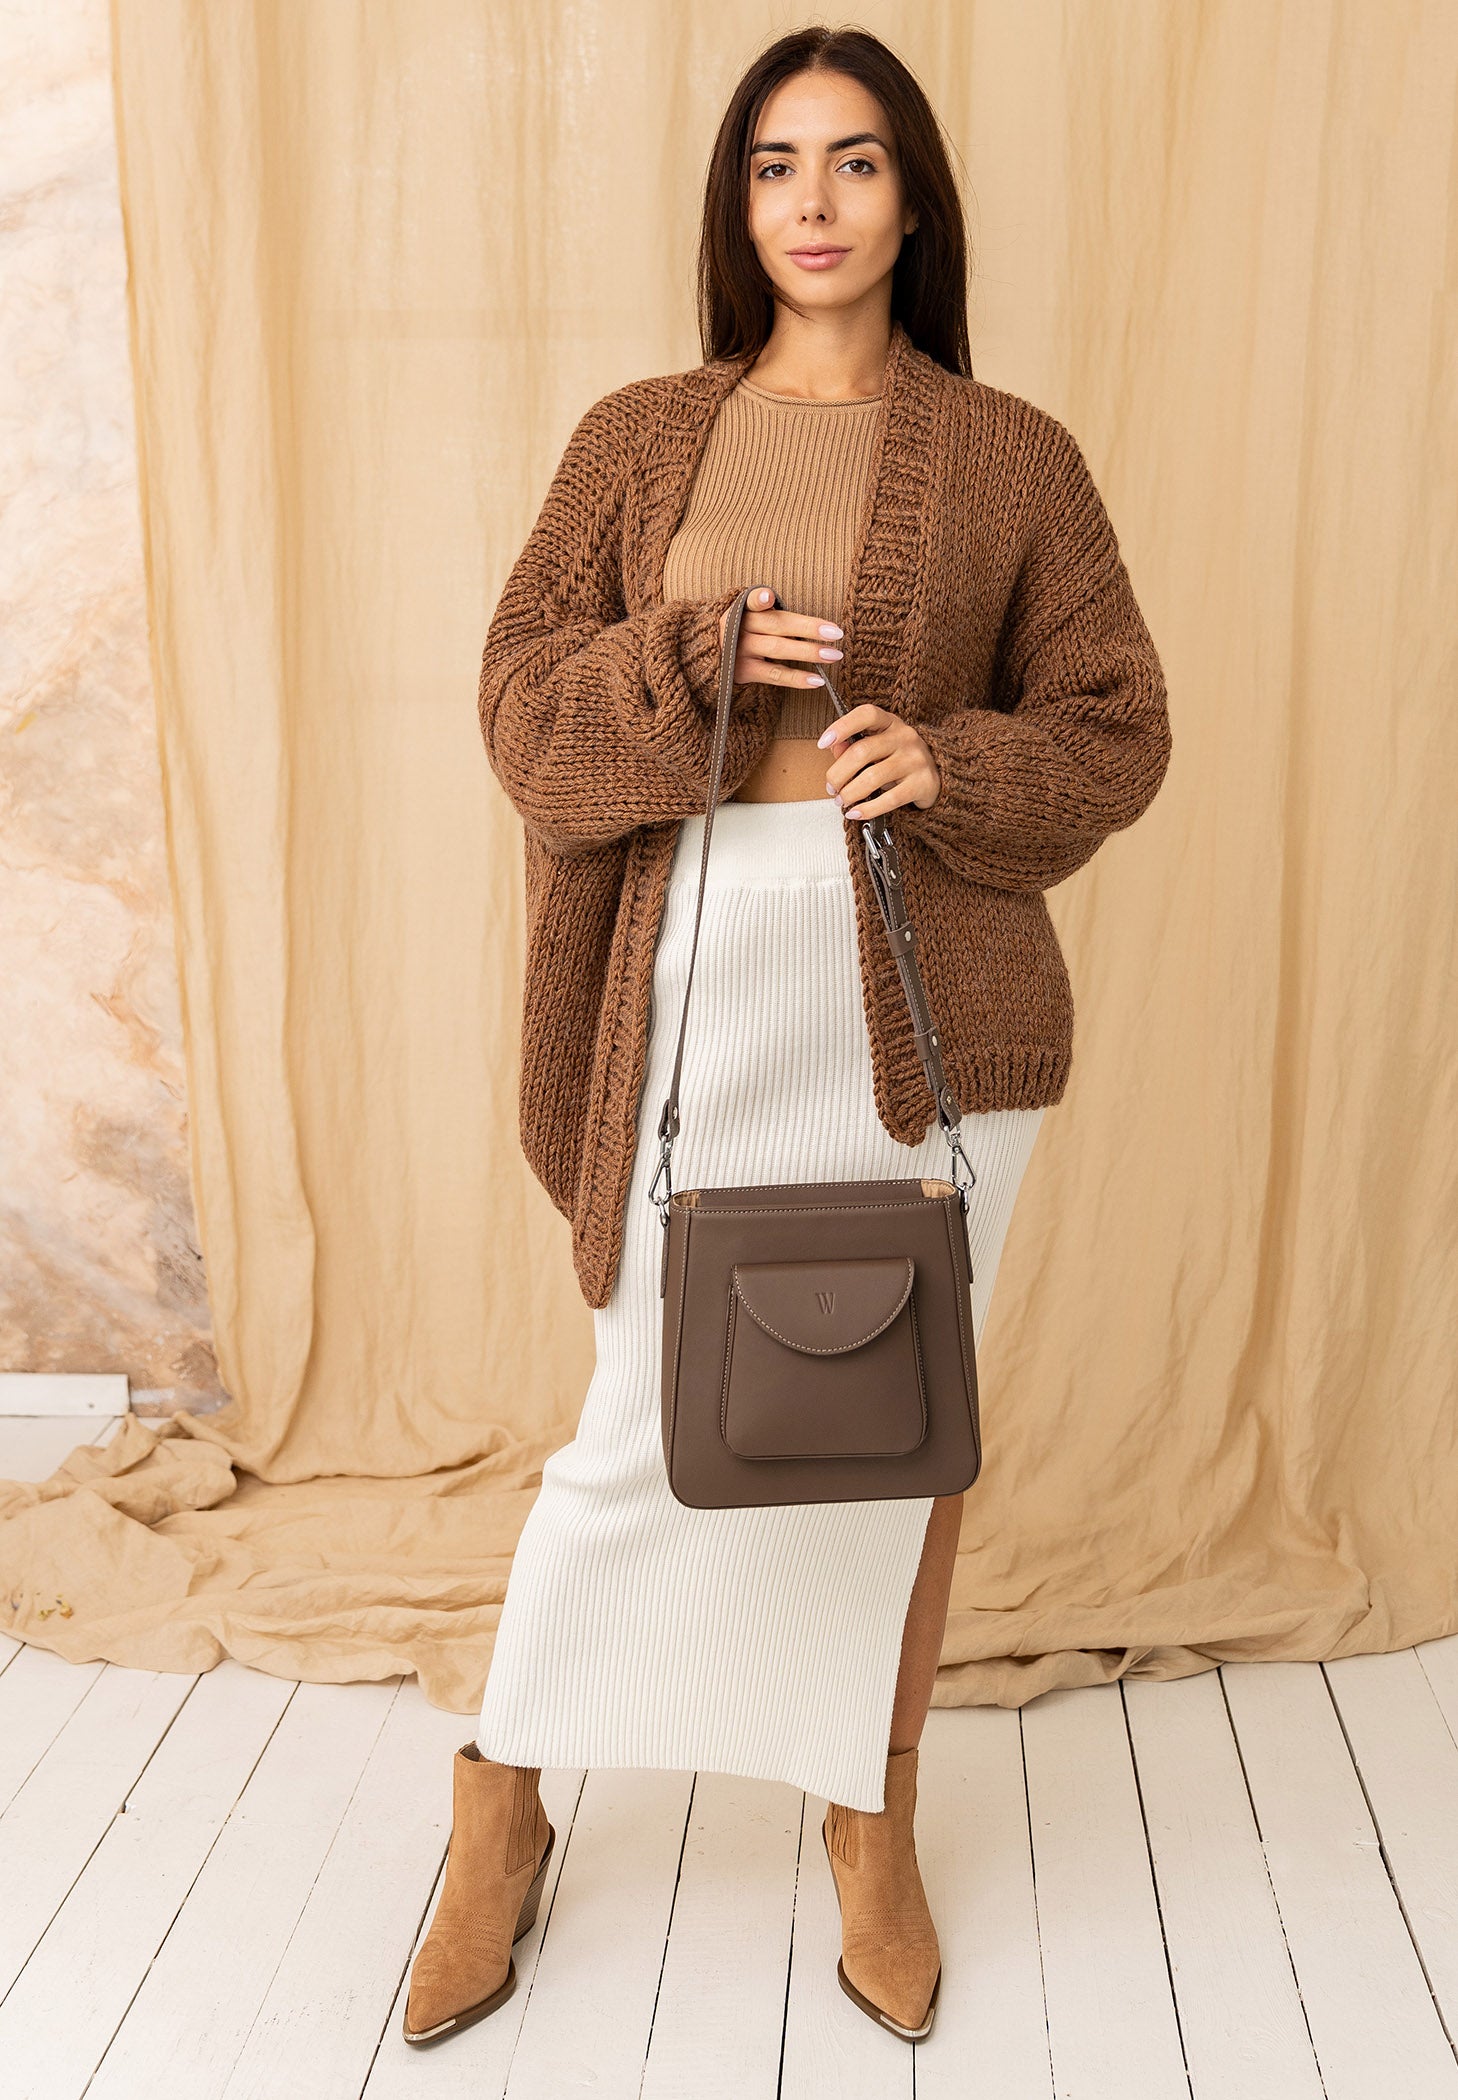 Medium | Women's bag in leather color mocha